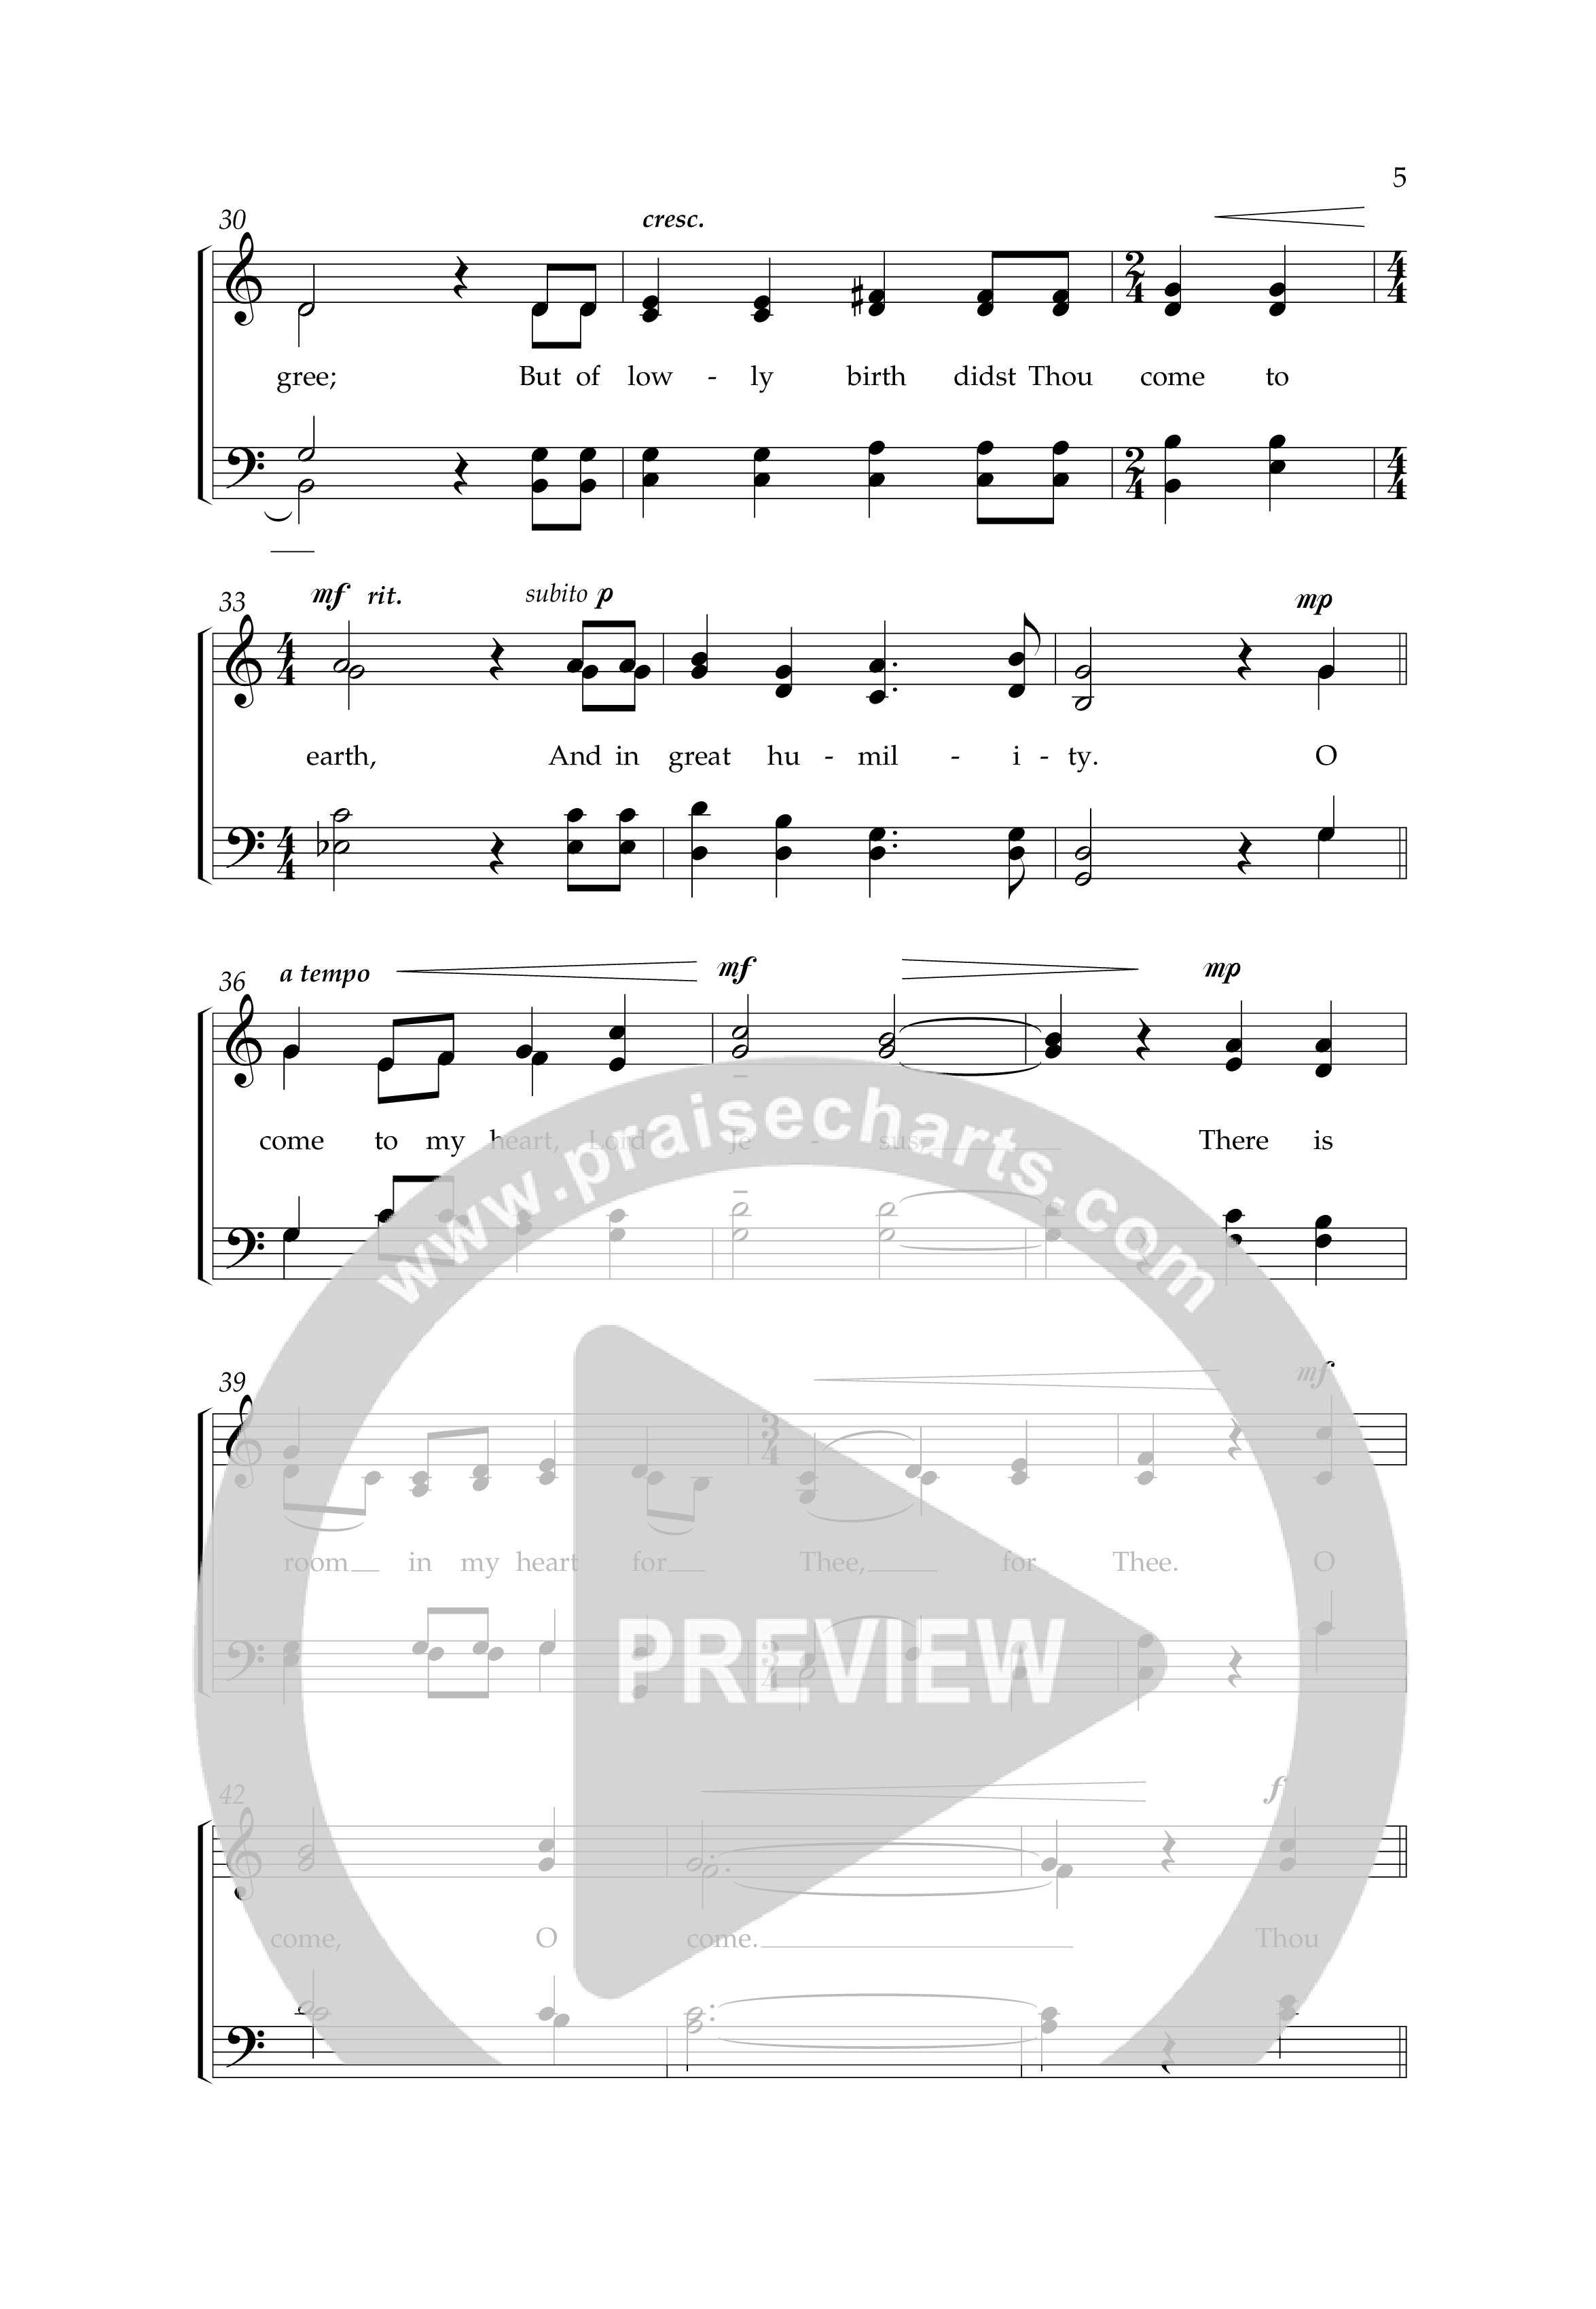 Thou Didst Leave Thy Throne (Choral Anthem SATB) Anthem (SATB/Piano) (Lifeway Choral / Arr. Cliff Duren)